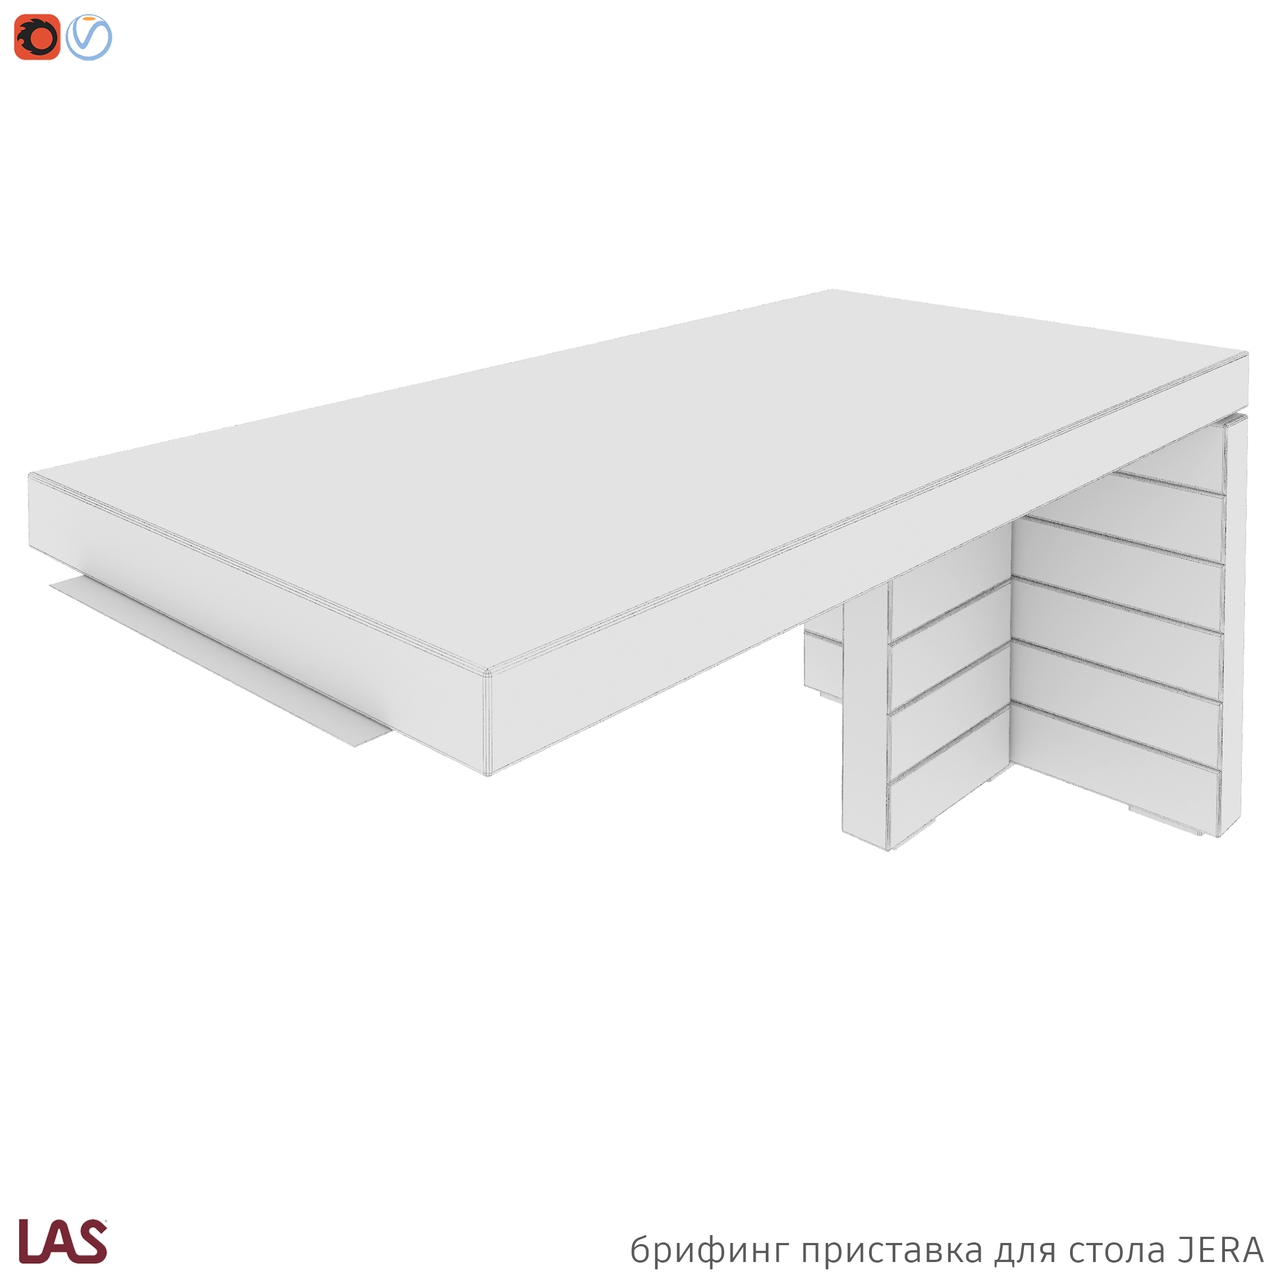 Превью G 3D-модели брифинг-приставки офисного стола LAS Jera 159910